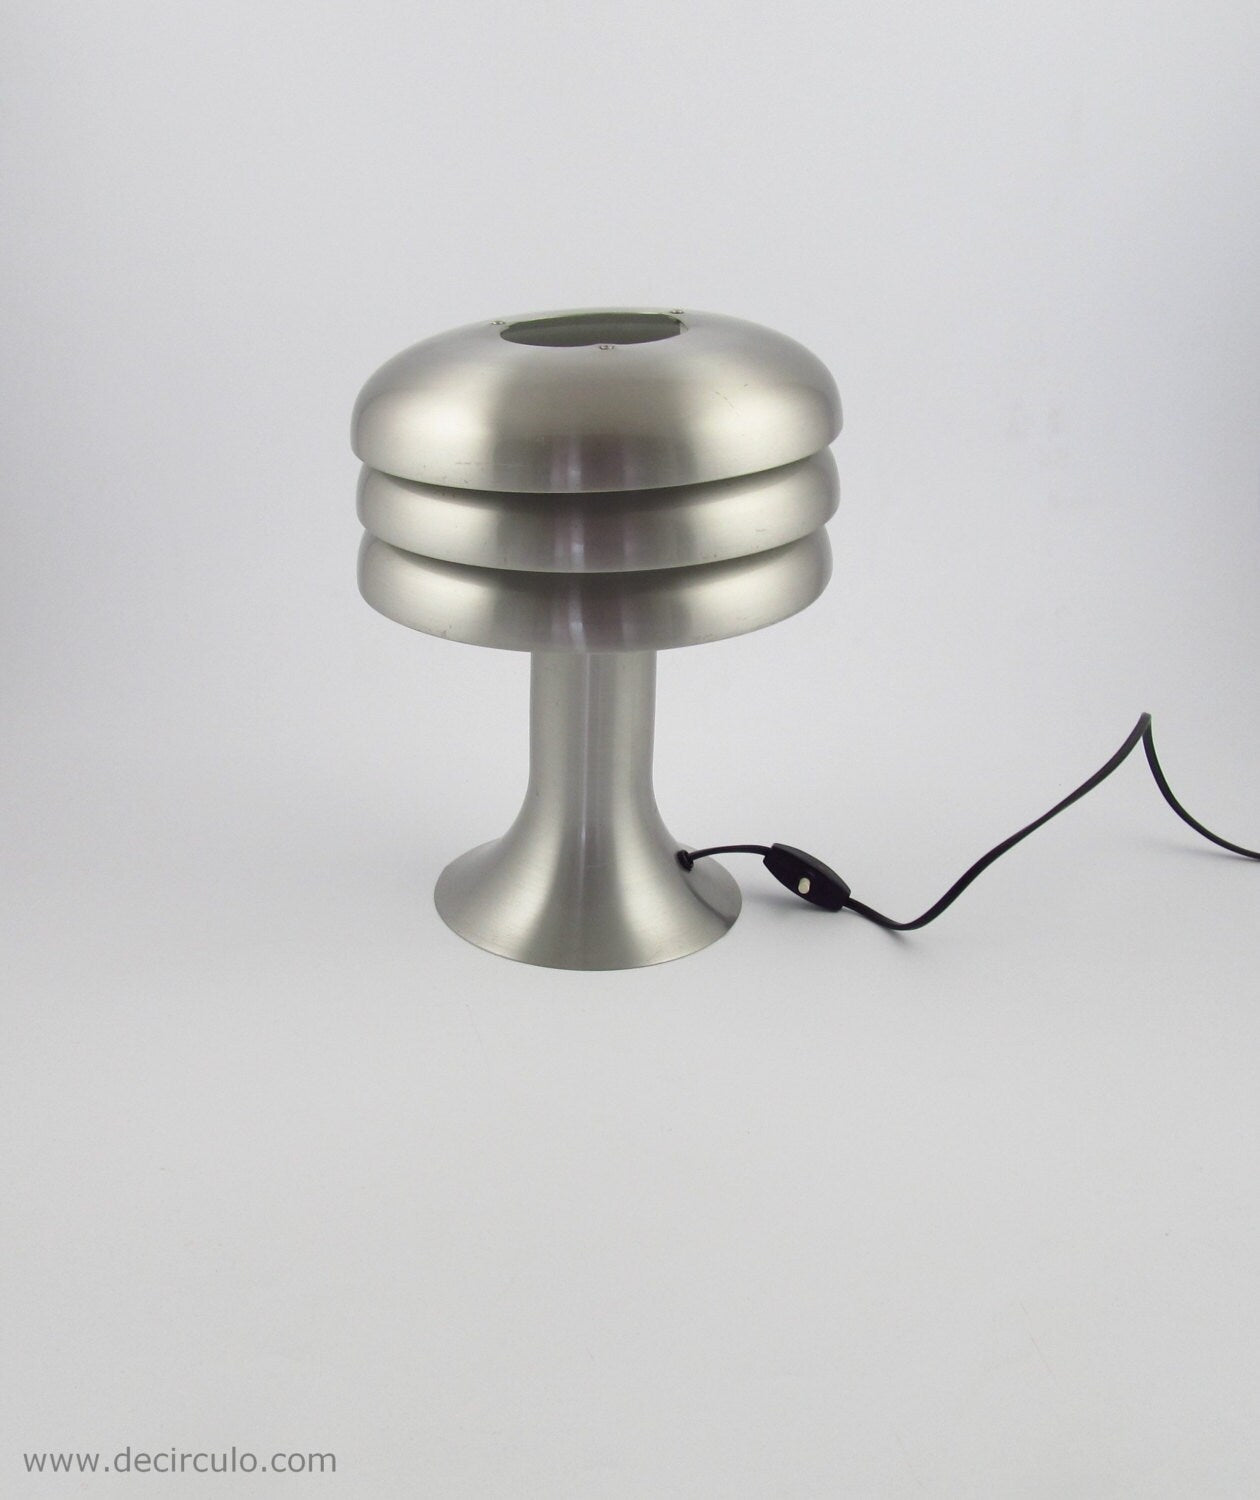 Hans-agne Jakobsson aluminium desklamp, Swedish design table lamp